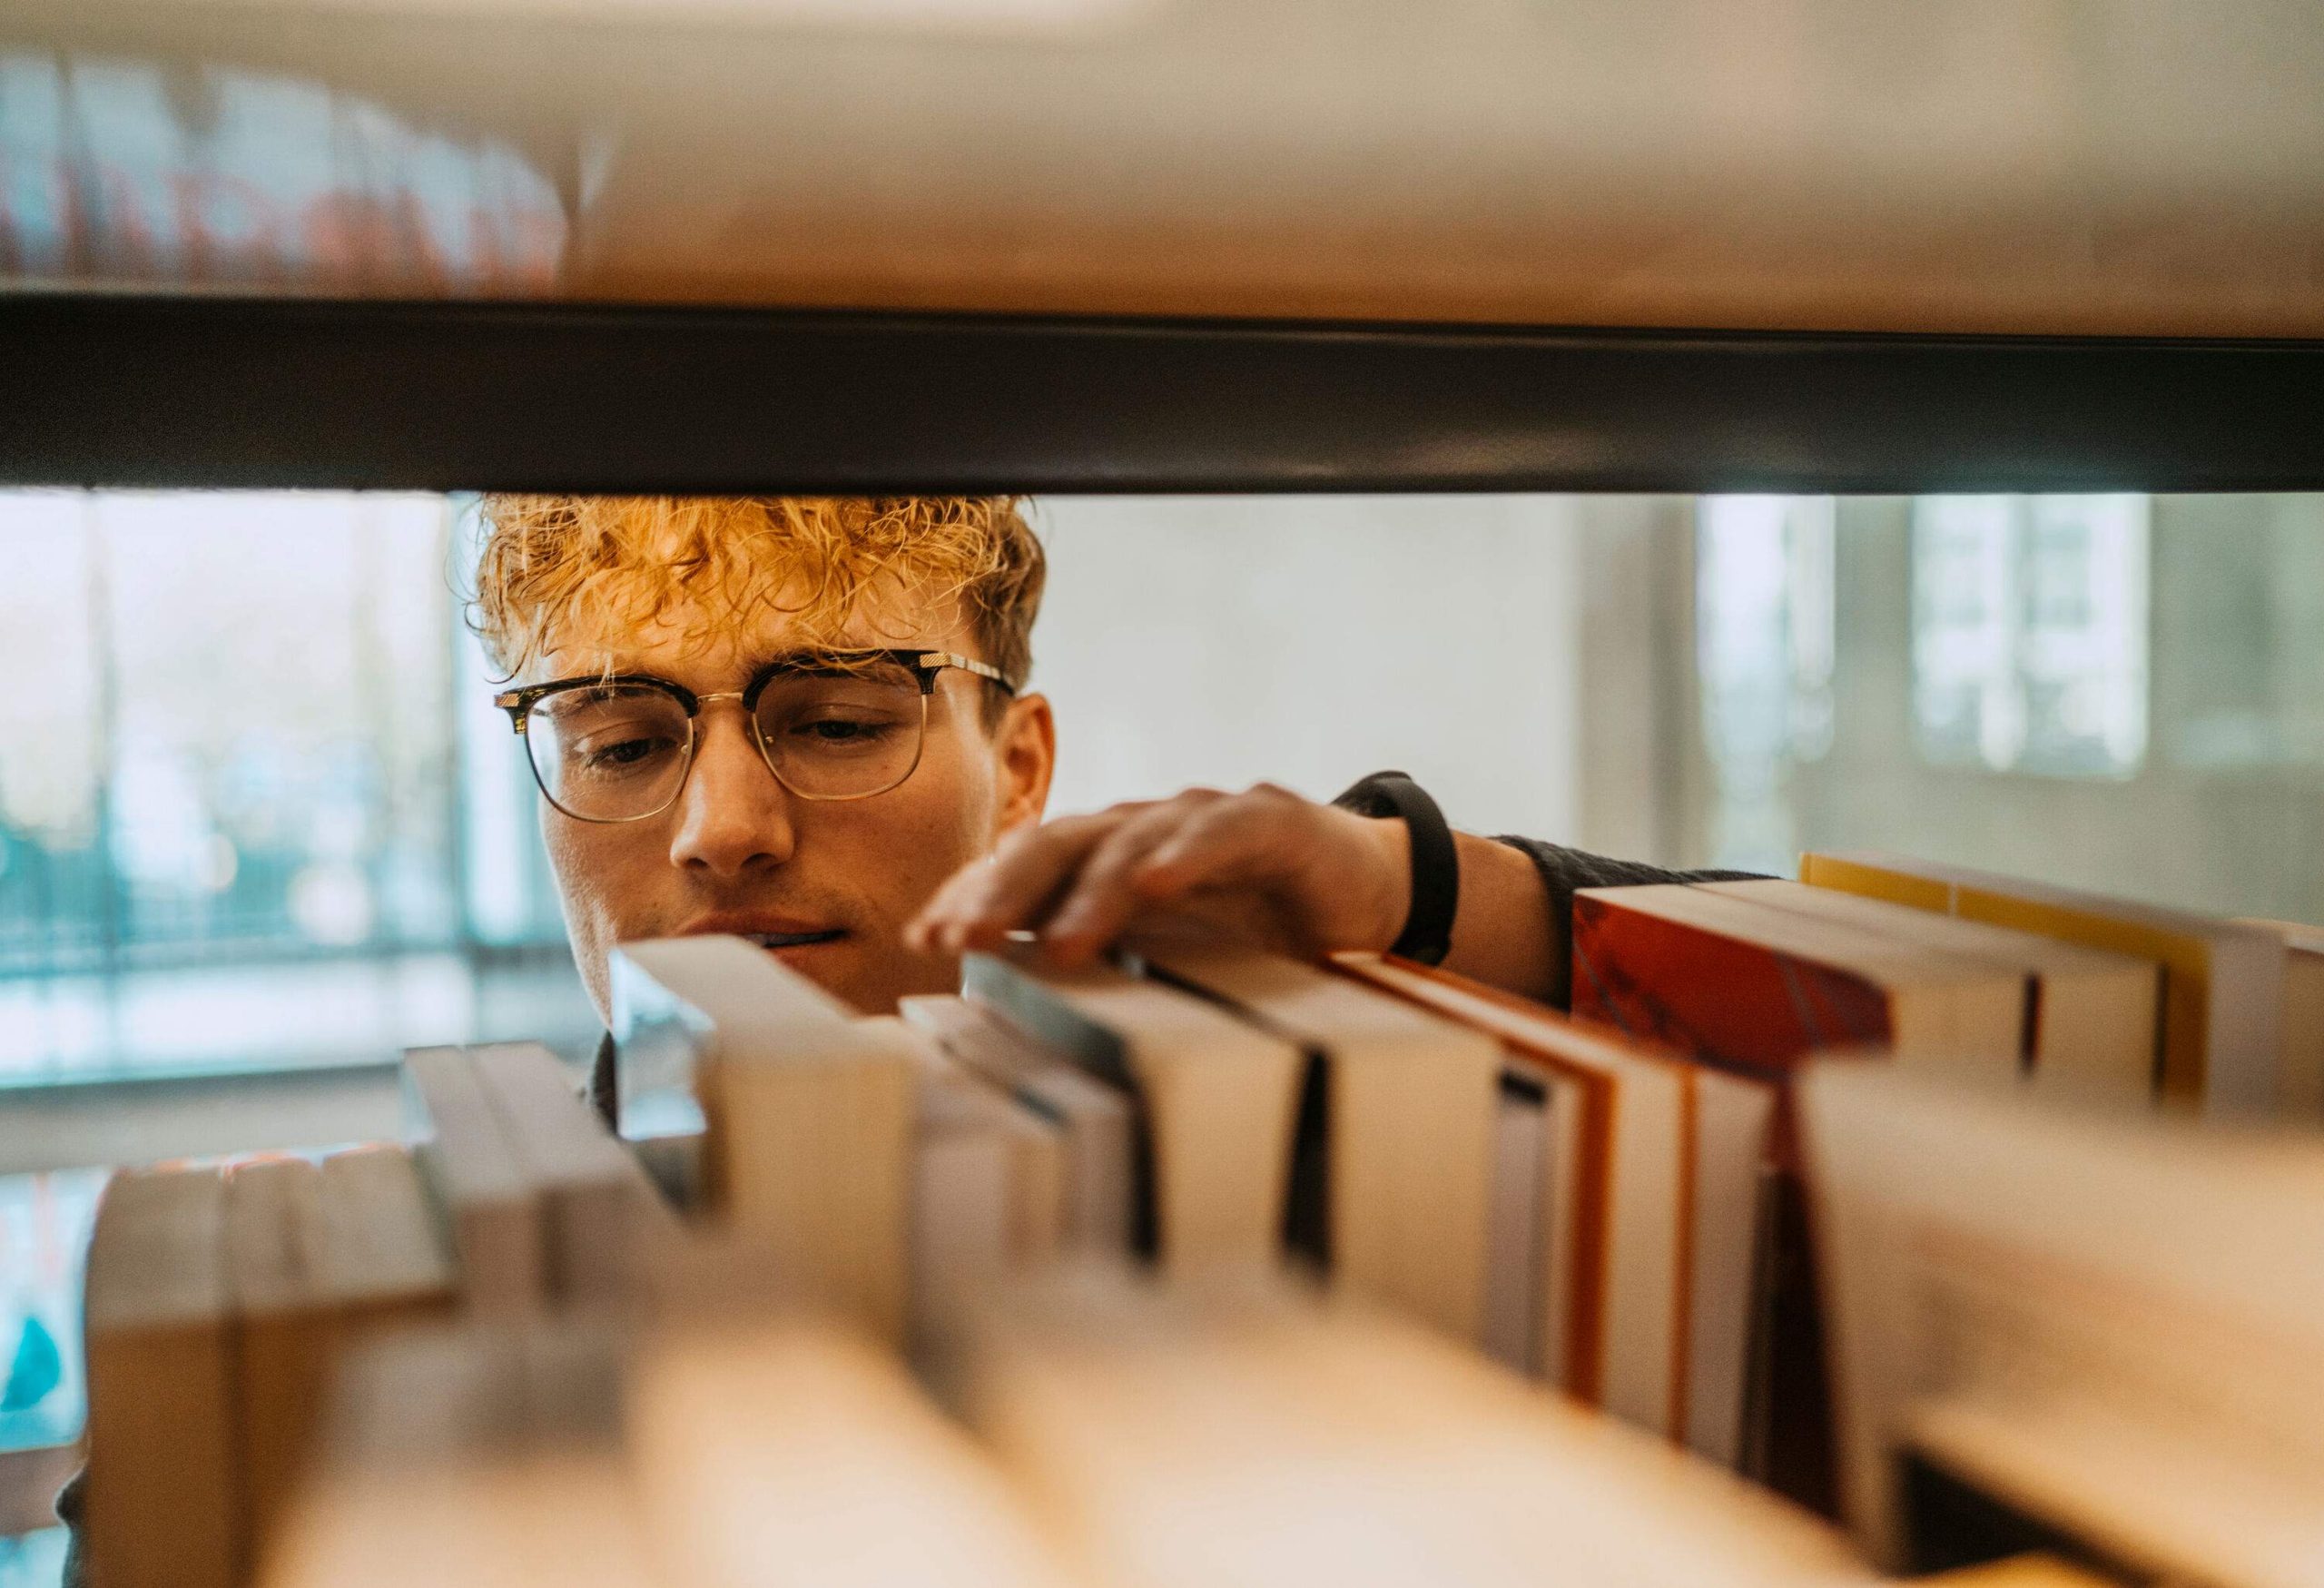 A blonde man browsing through books on the shelf.